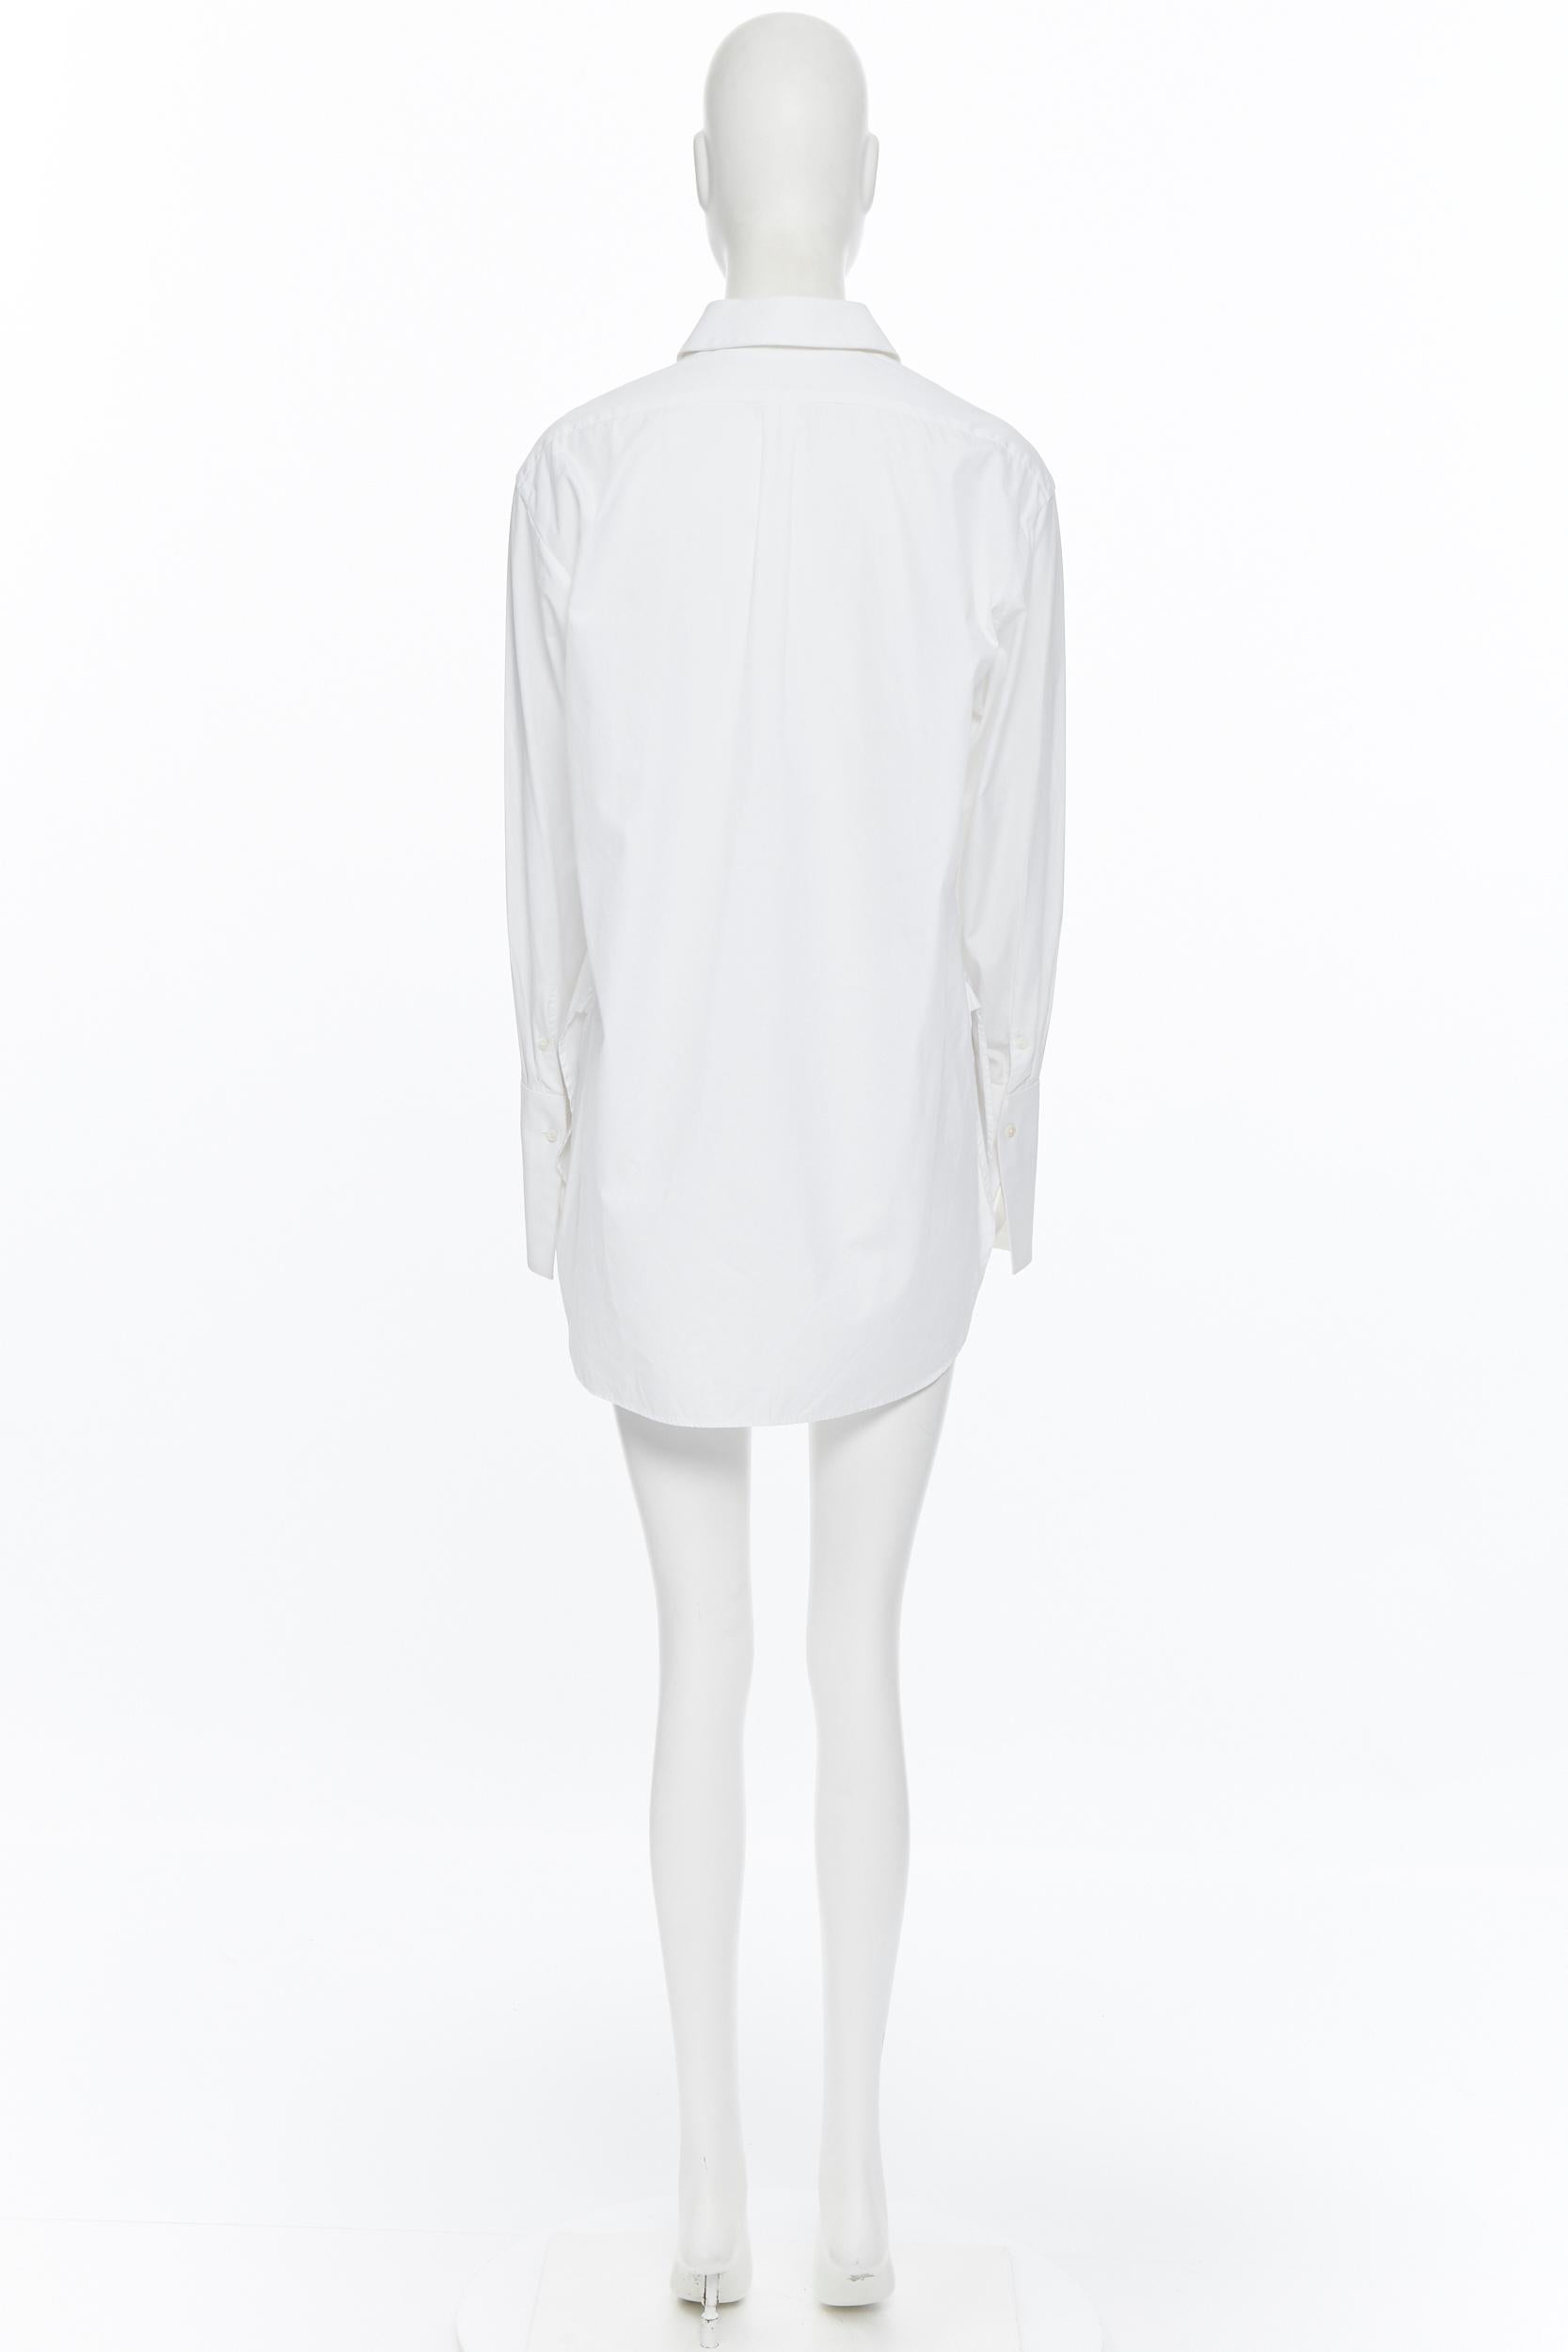 Women's PALMER HARDING white cotton elongated cuff curvec hem oversized shirt UK8